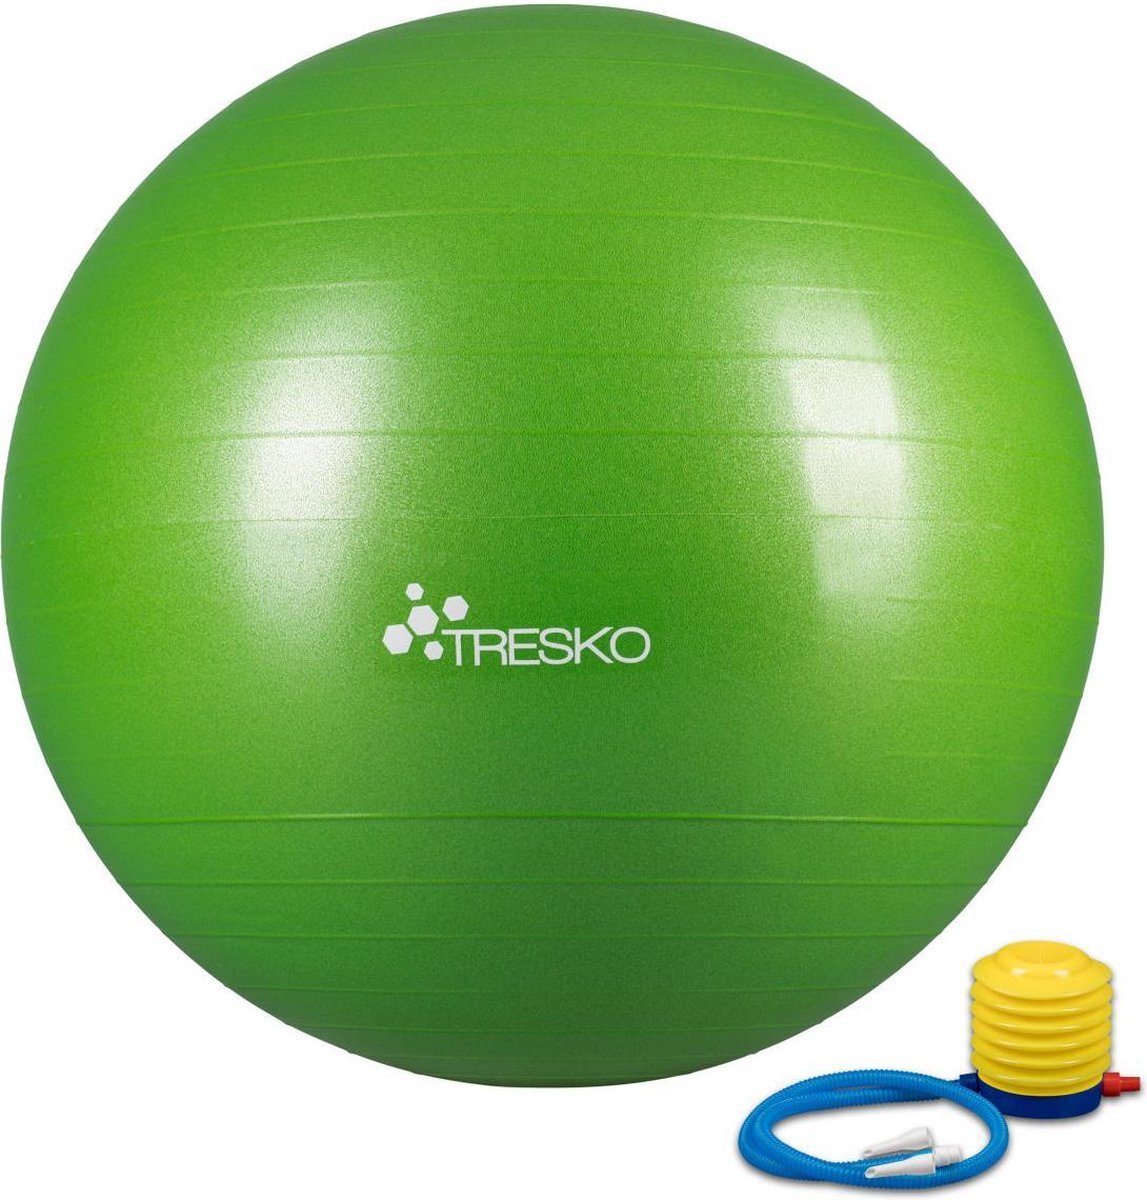 Tresko Fitnessbal met pomp - diameter 75 cm - Groen